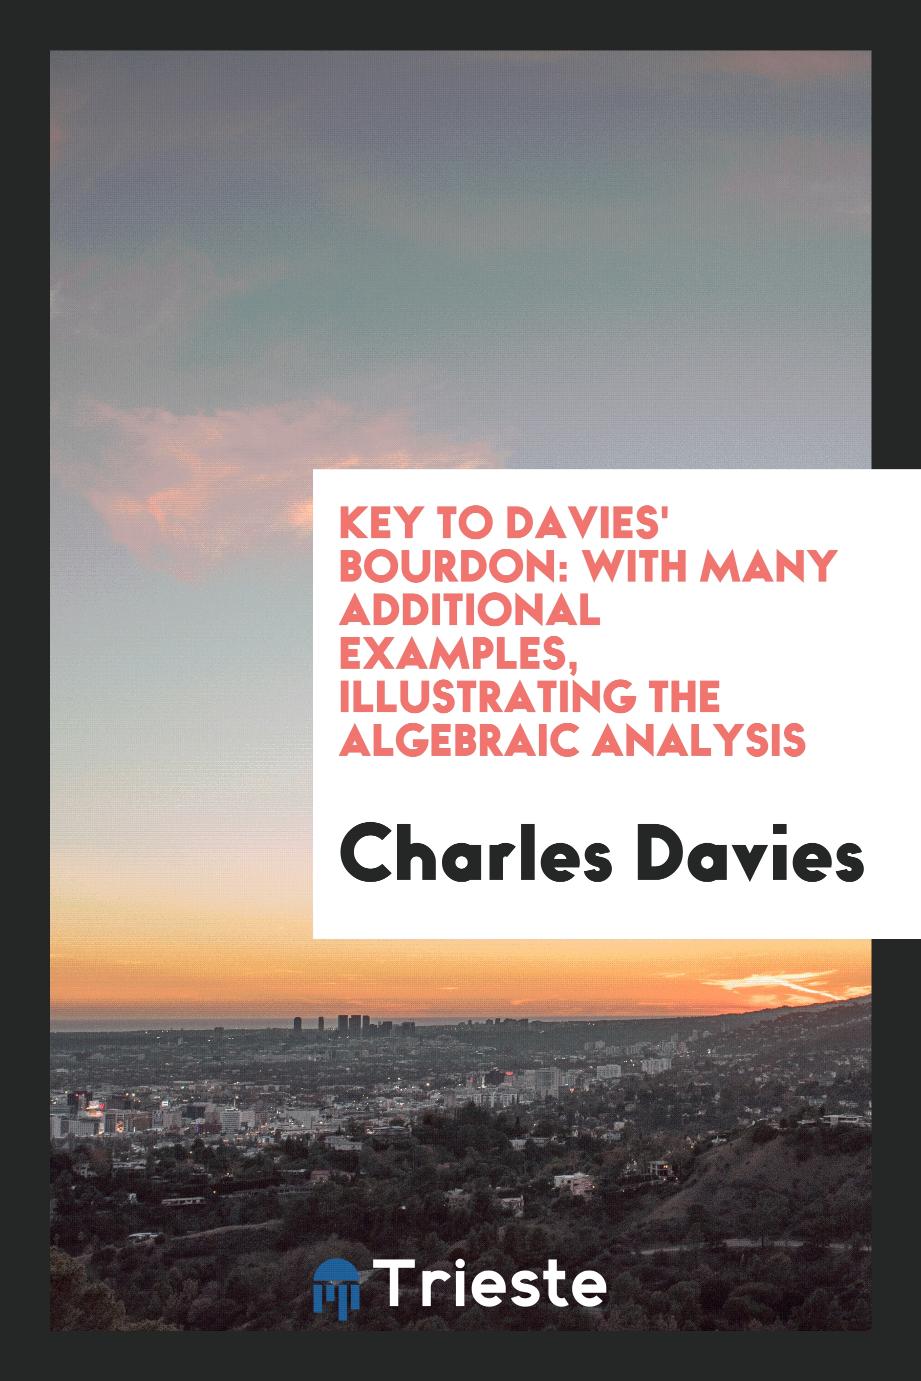 Key to Davies' Bourdon: with many additional examples, illustrating the algebraic analysis